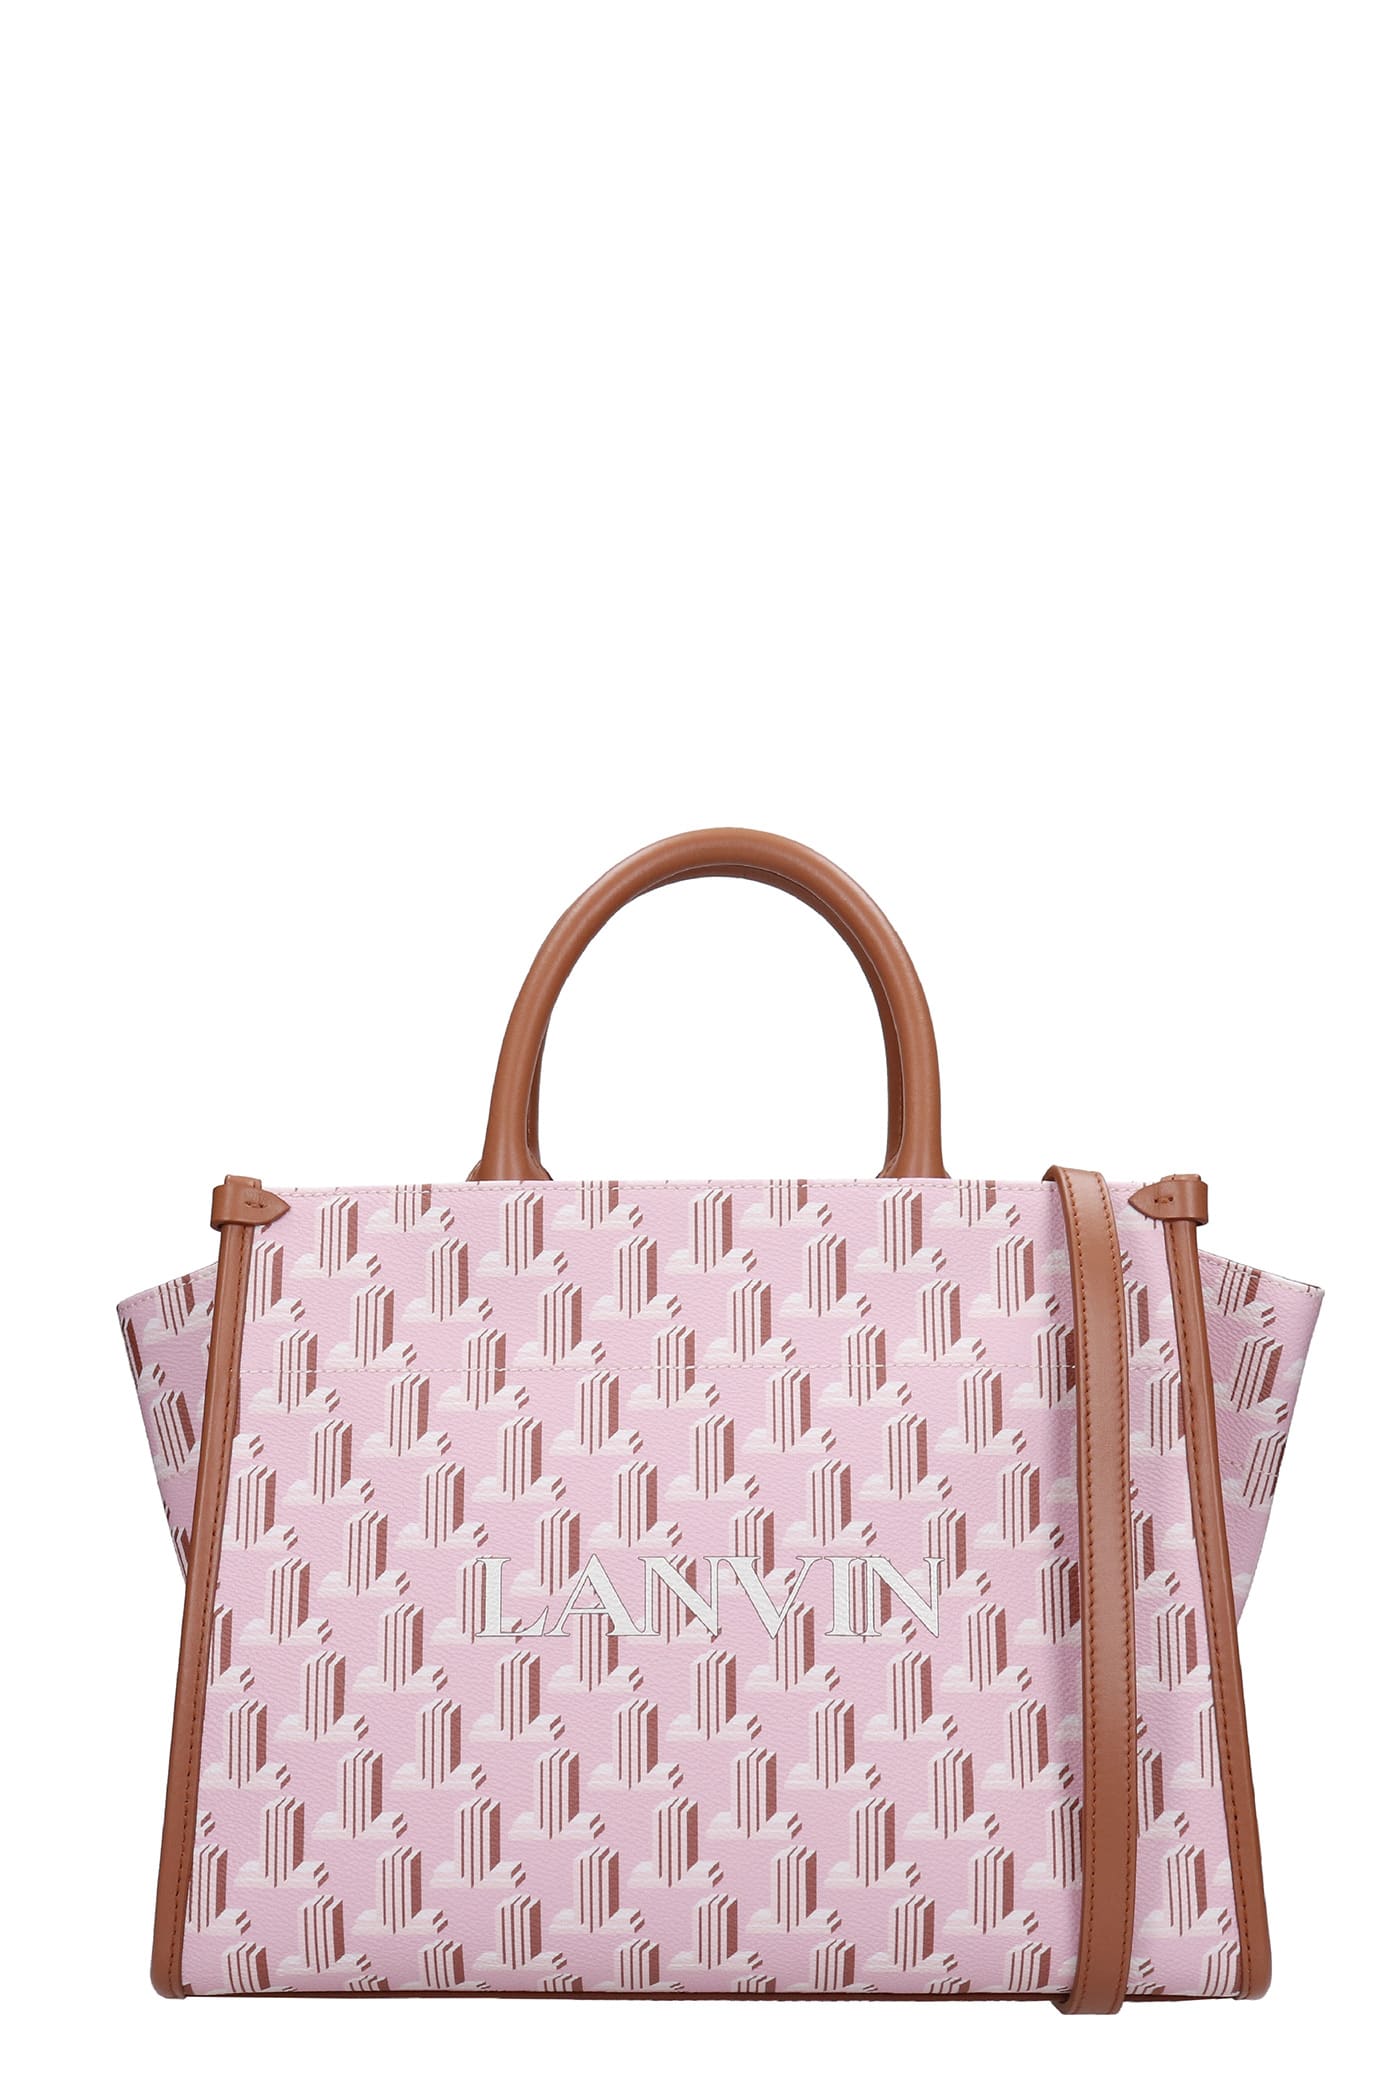 LANVIN Bags for Women | ModeSens